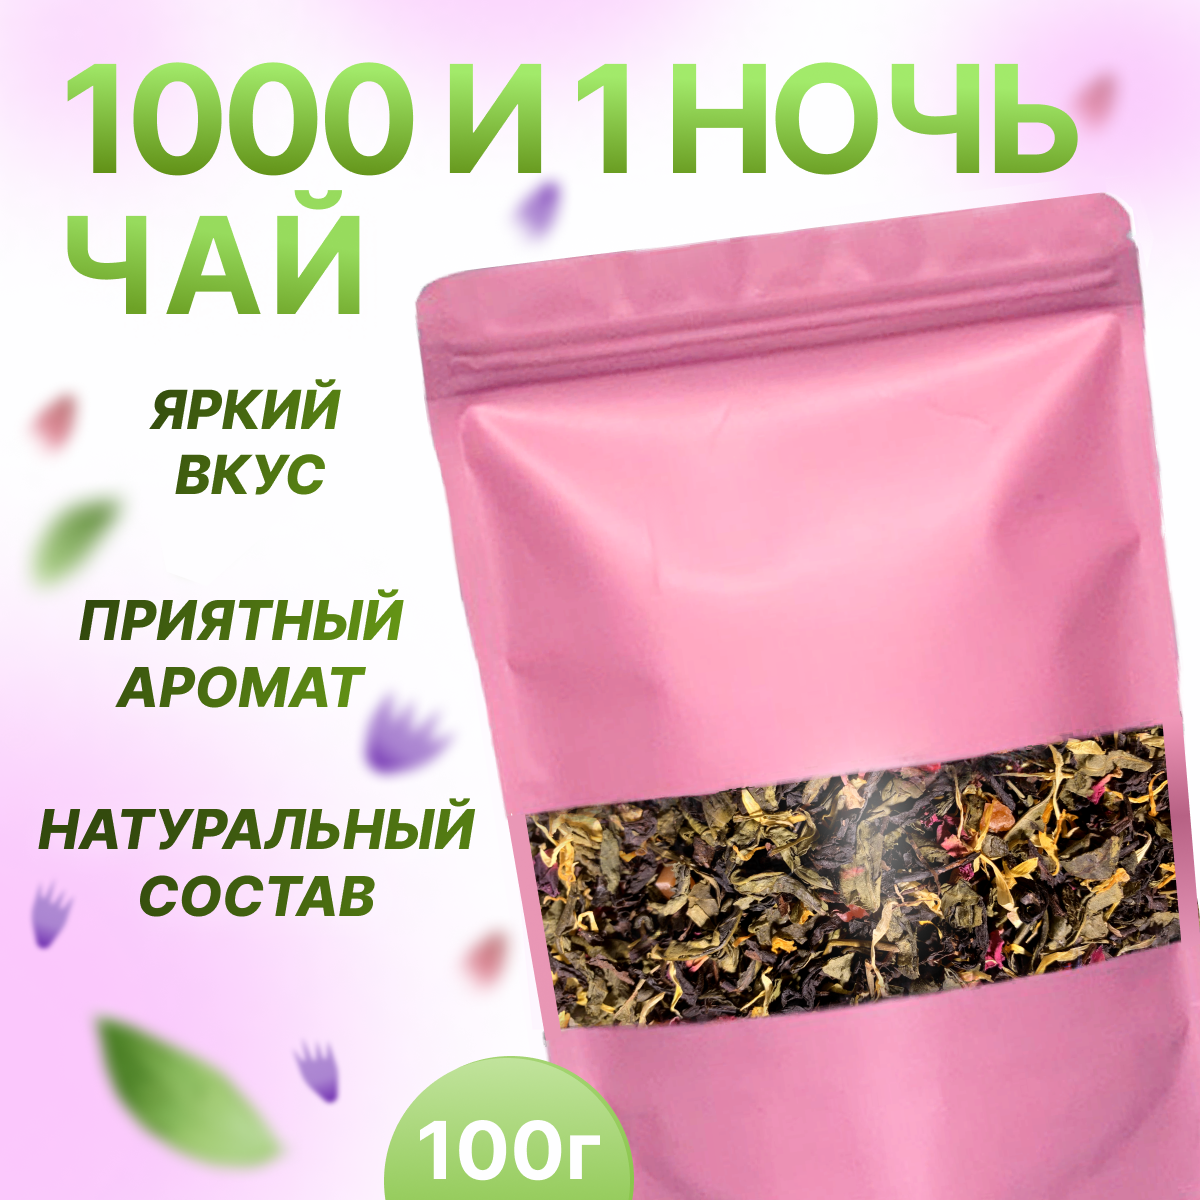 Чай 1000 и 1 ночь, Almon.d, 100 гр